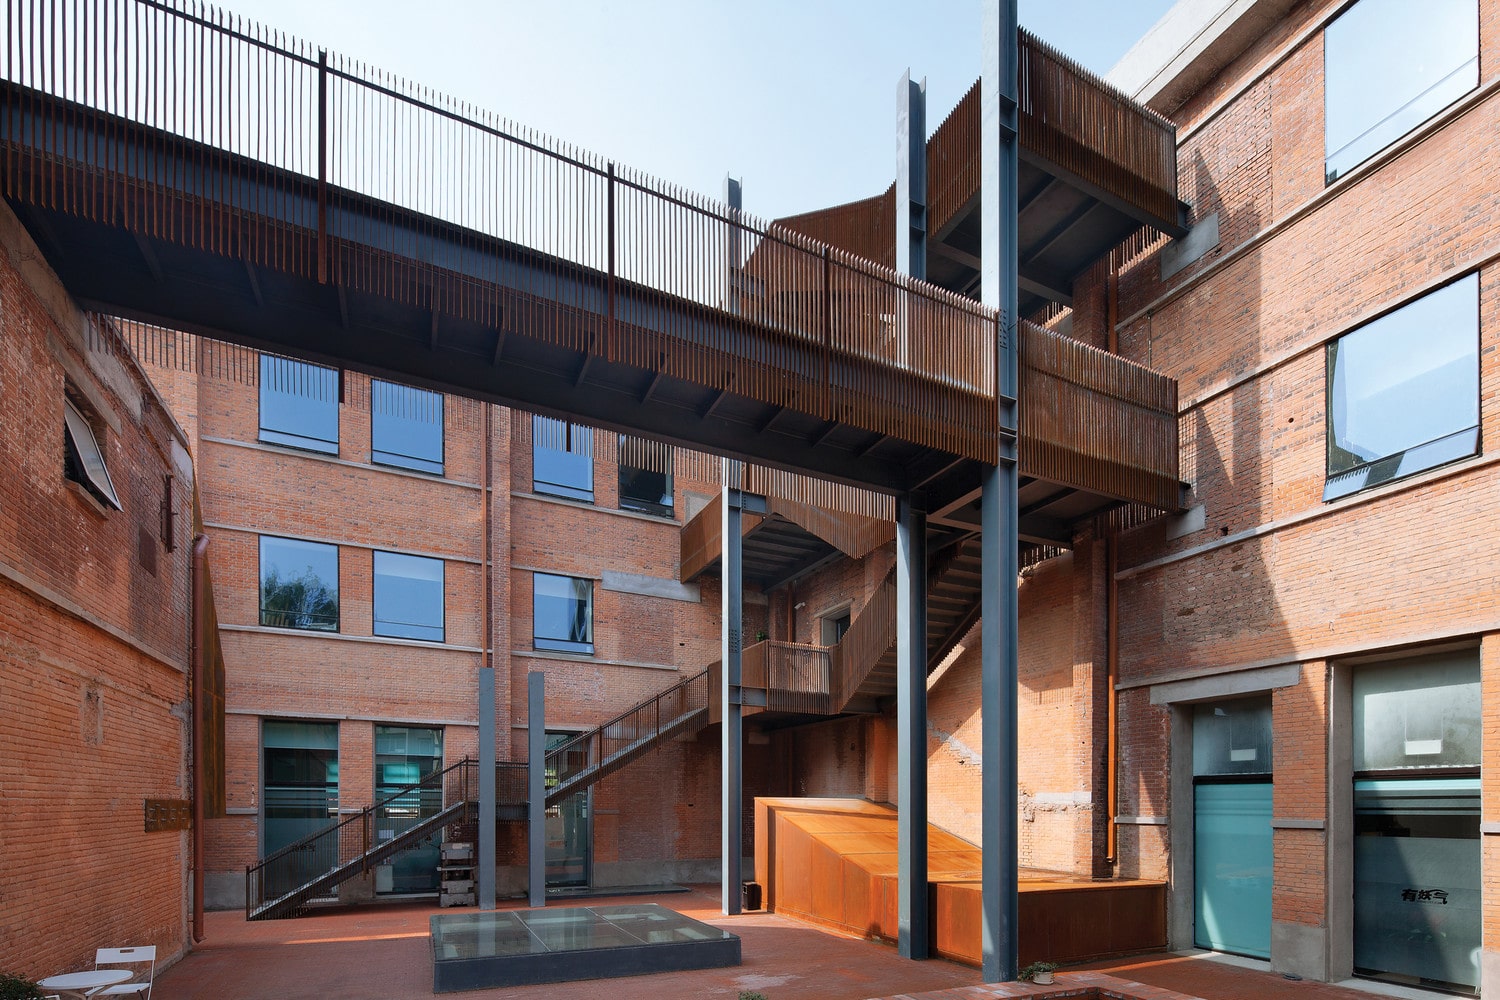 Origin Architects kept weathered steel railings in the courtyard kept as it is 